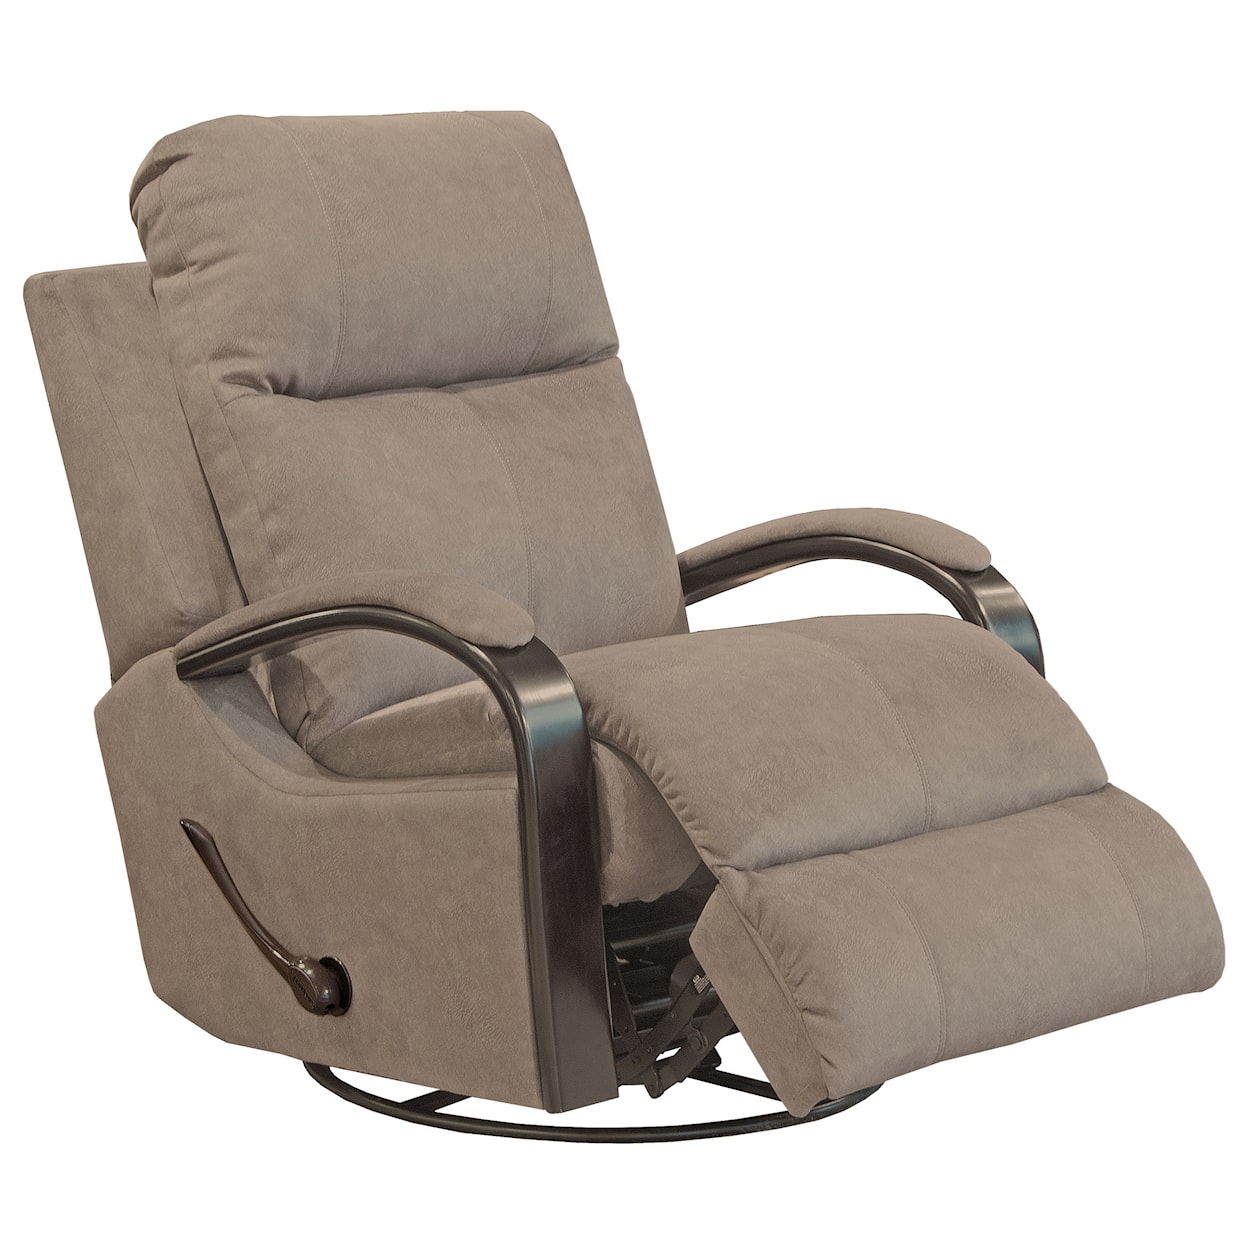 Carolina Furniture 4703 Niles Swivel Glider Recliner